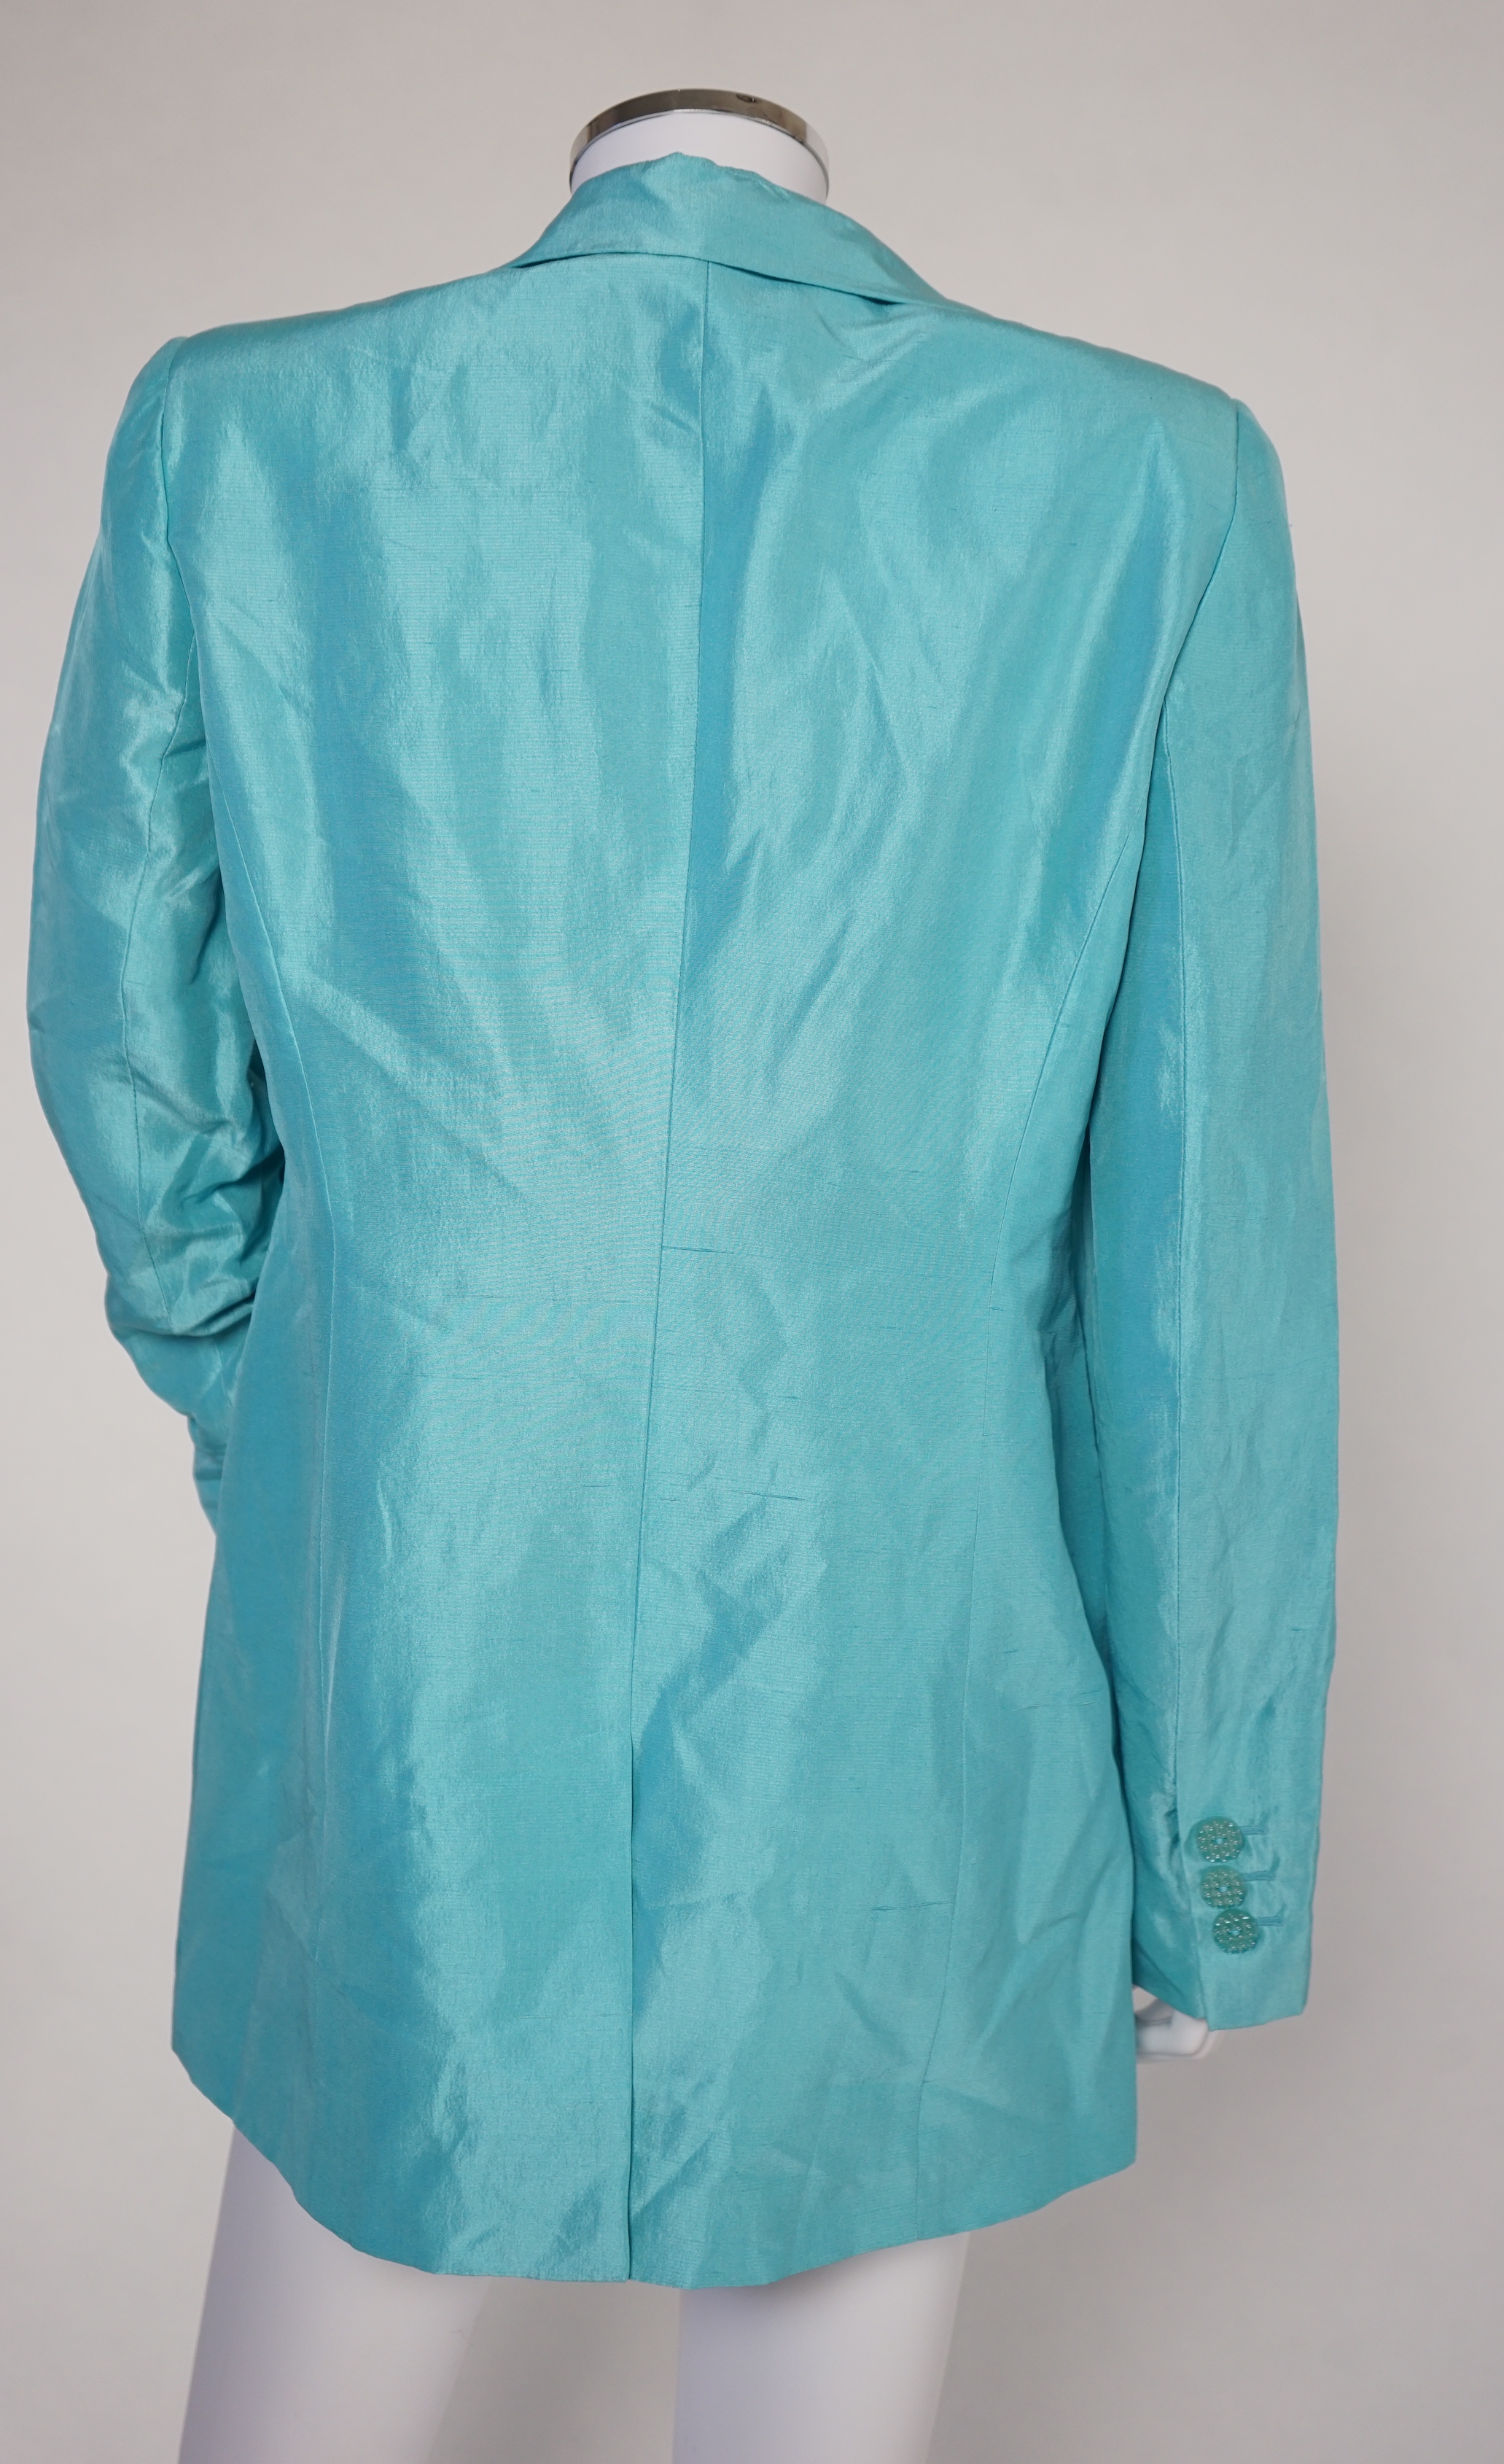 Four Emporio Armani lady's jackets, light blue silk size EU 46, all the others size EU 44